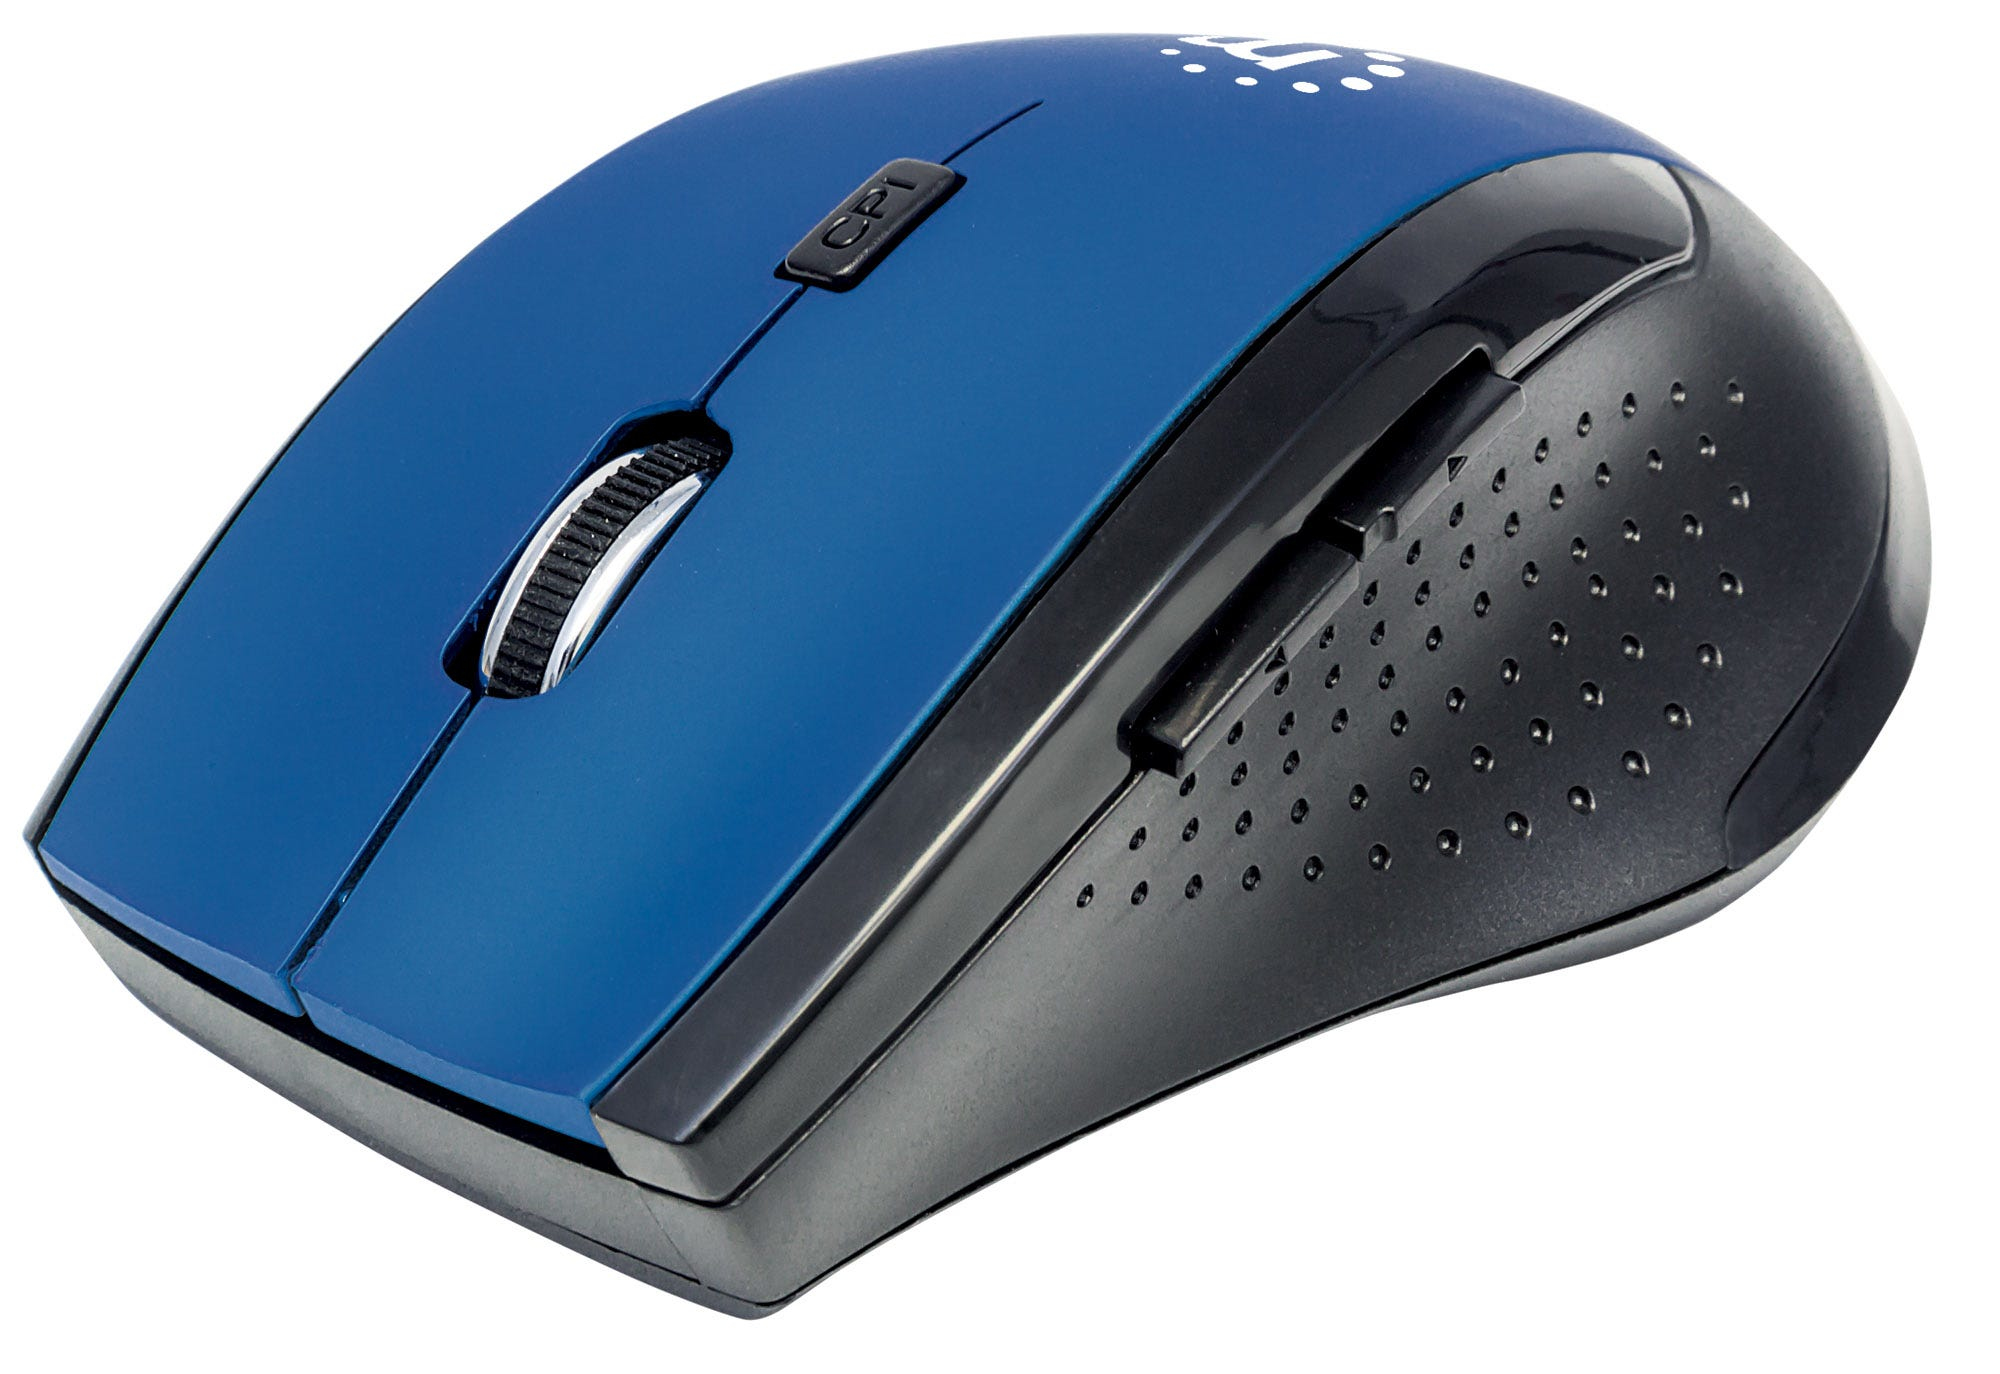 Manhattan Curve Wireless Mouse, Blue/Black, Adjustable DPI (800, 1200 or 1600dpi)